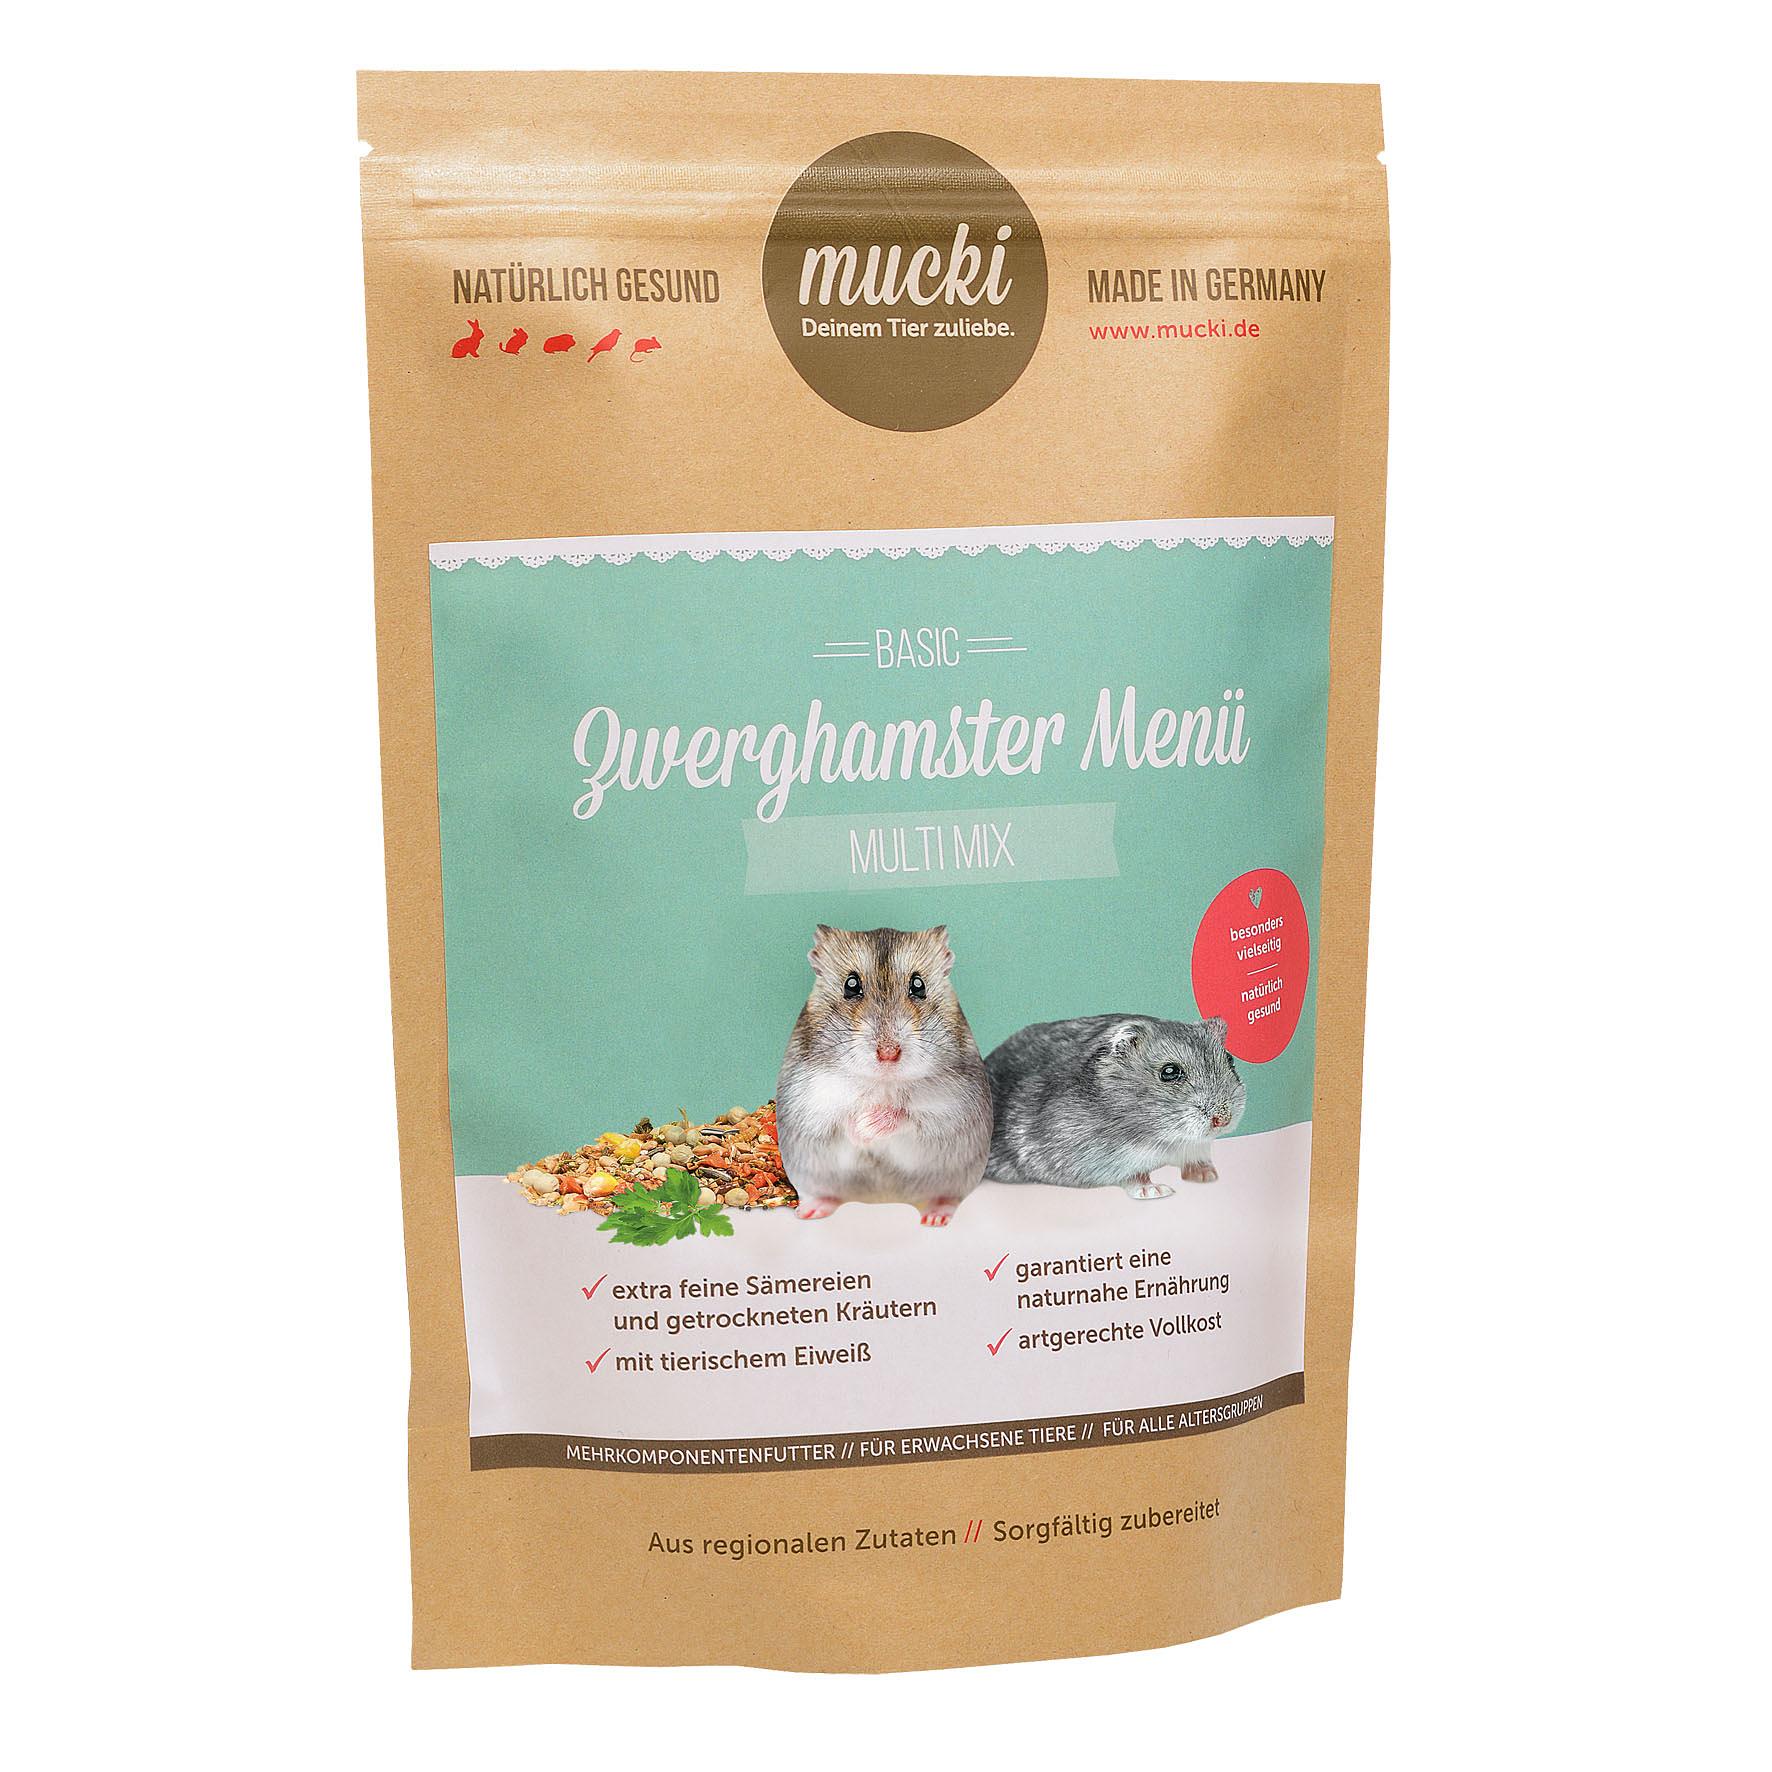 Mucki Menu pour hamster de nain Multi Mix